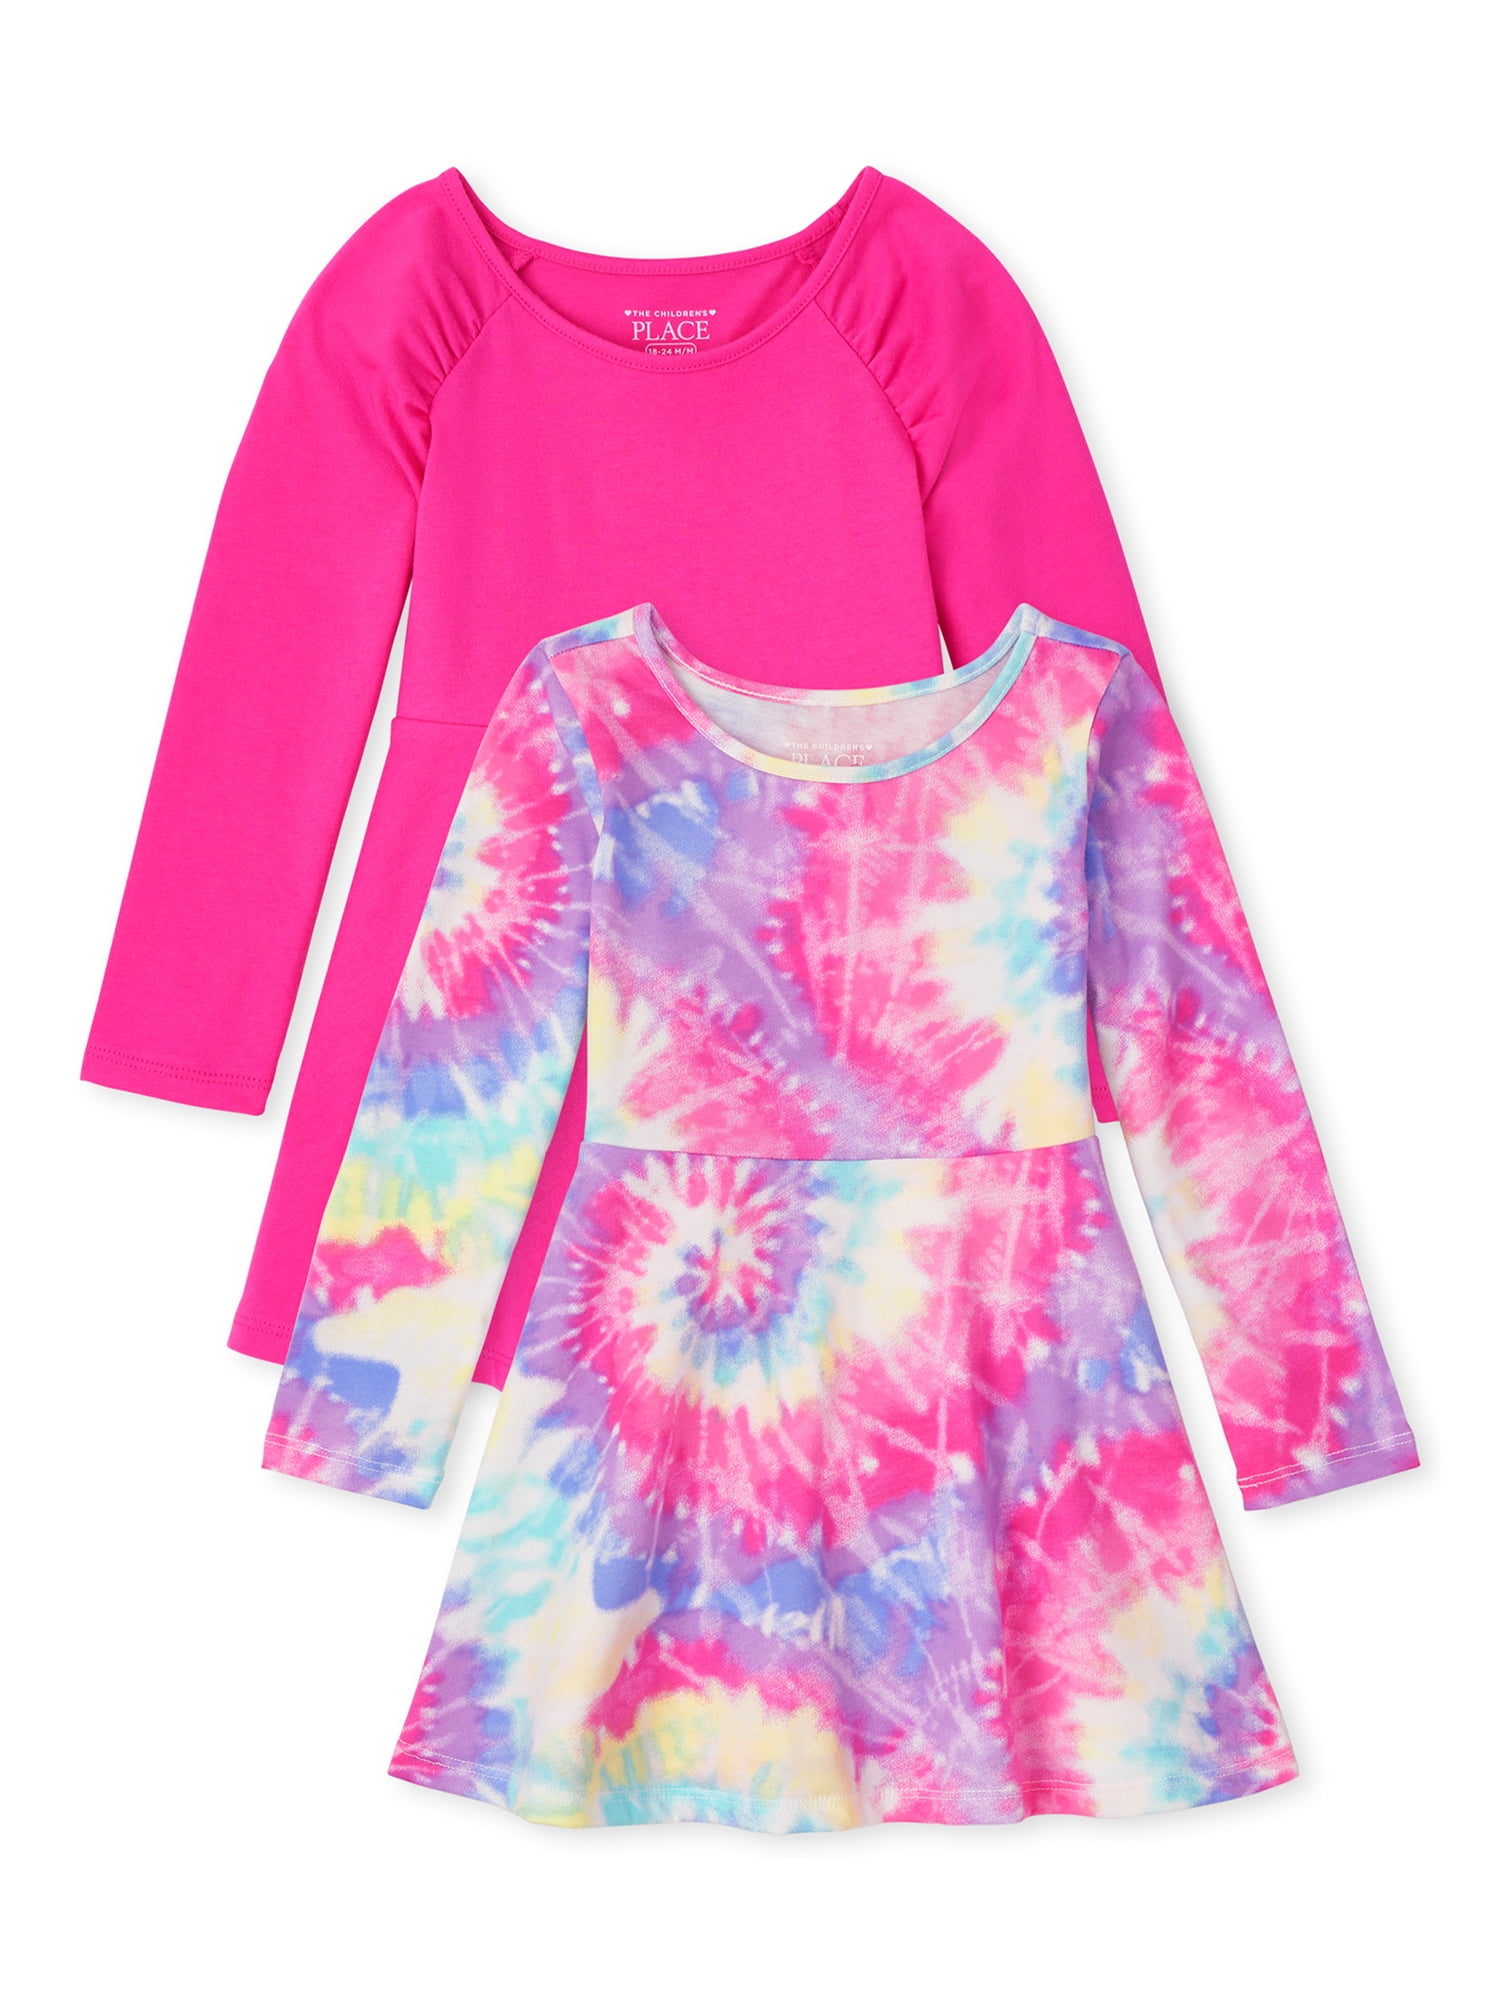 NWT OshKosh B'Gosh Toddler Girl Purple Summer Floral Tank Dress 2T 